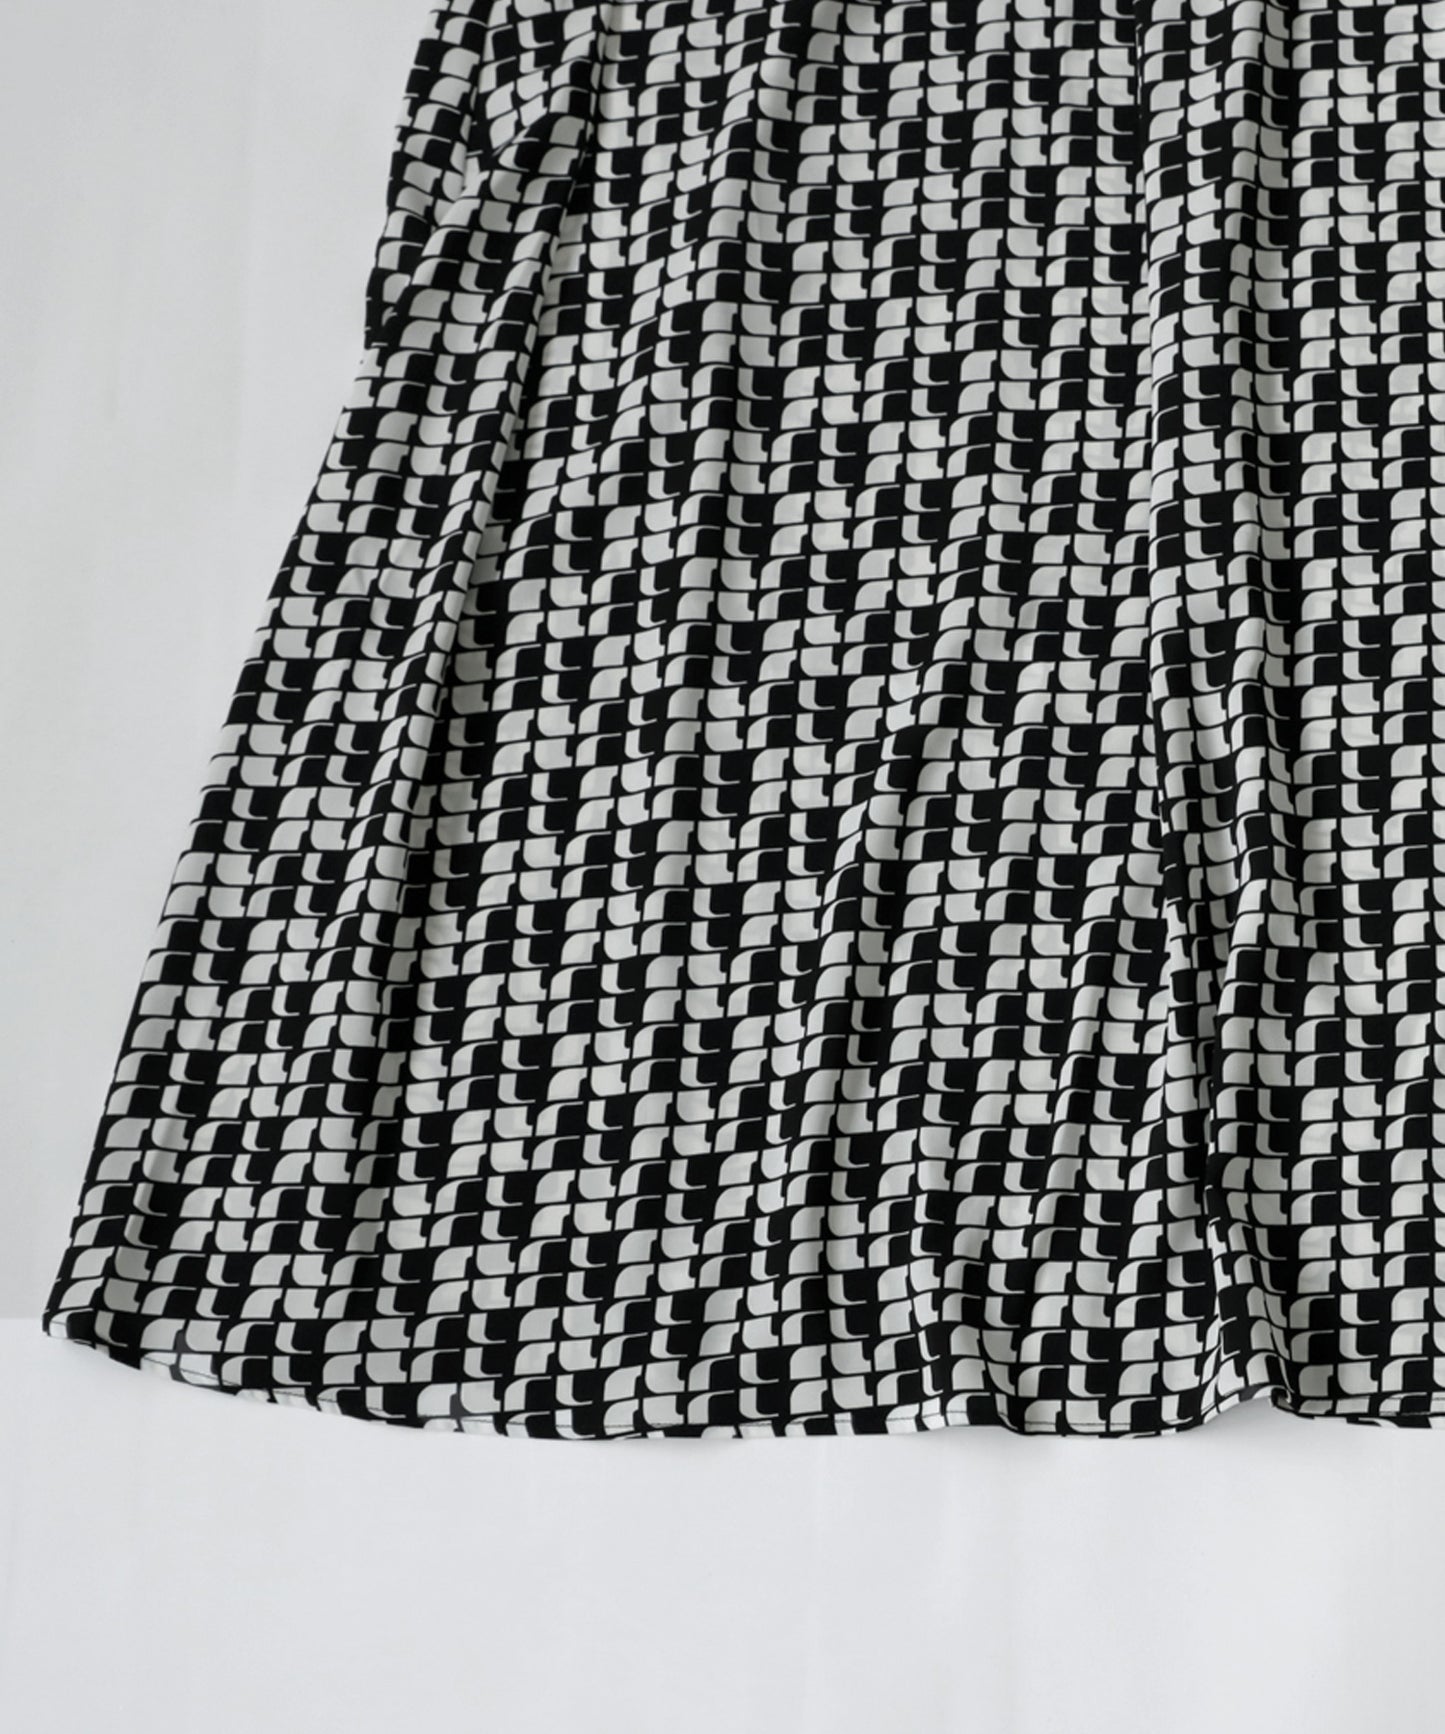 Retro pattern dress Ladies Long short sleeve